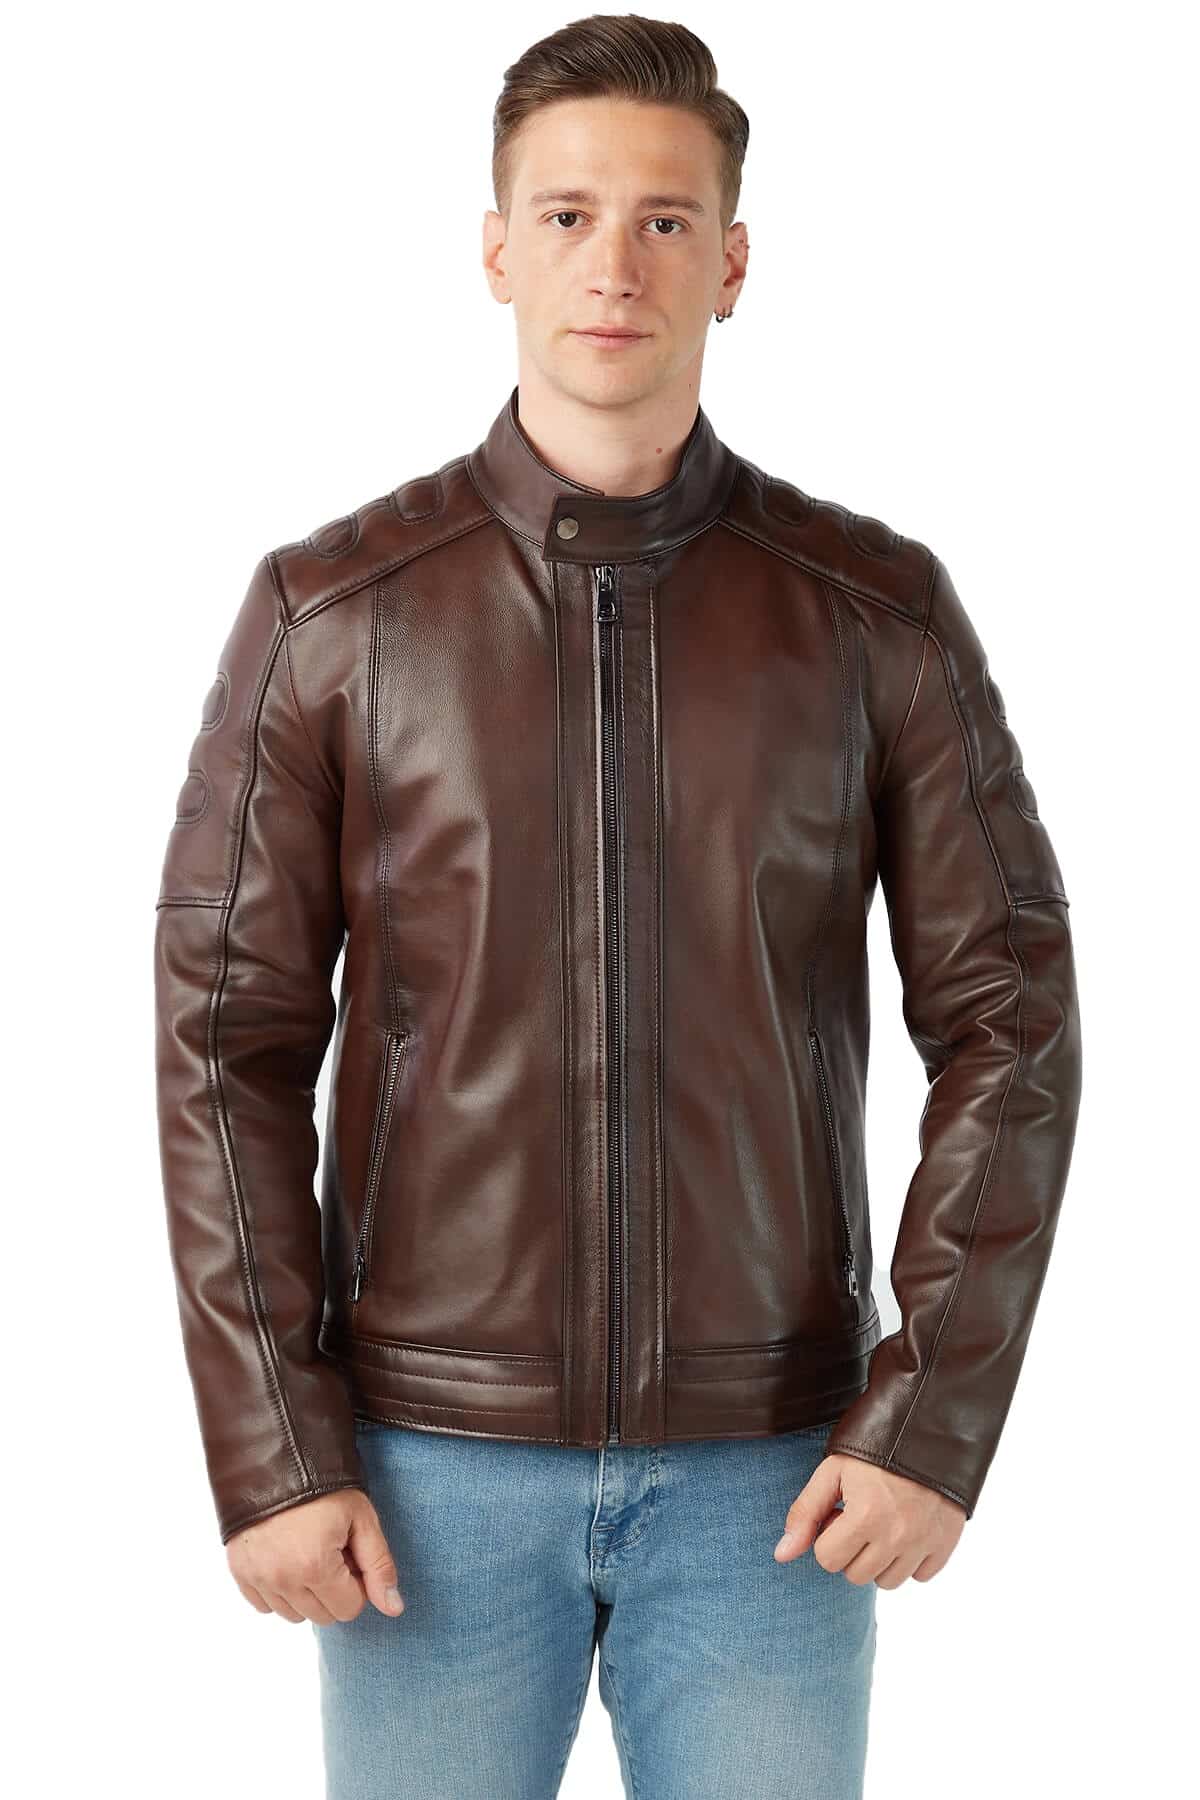 III-Fashions Men's Distressed Lambskin Leather Biker Jacket